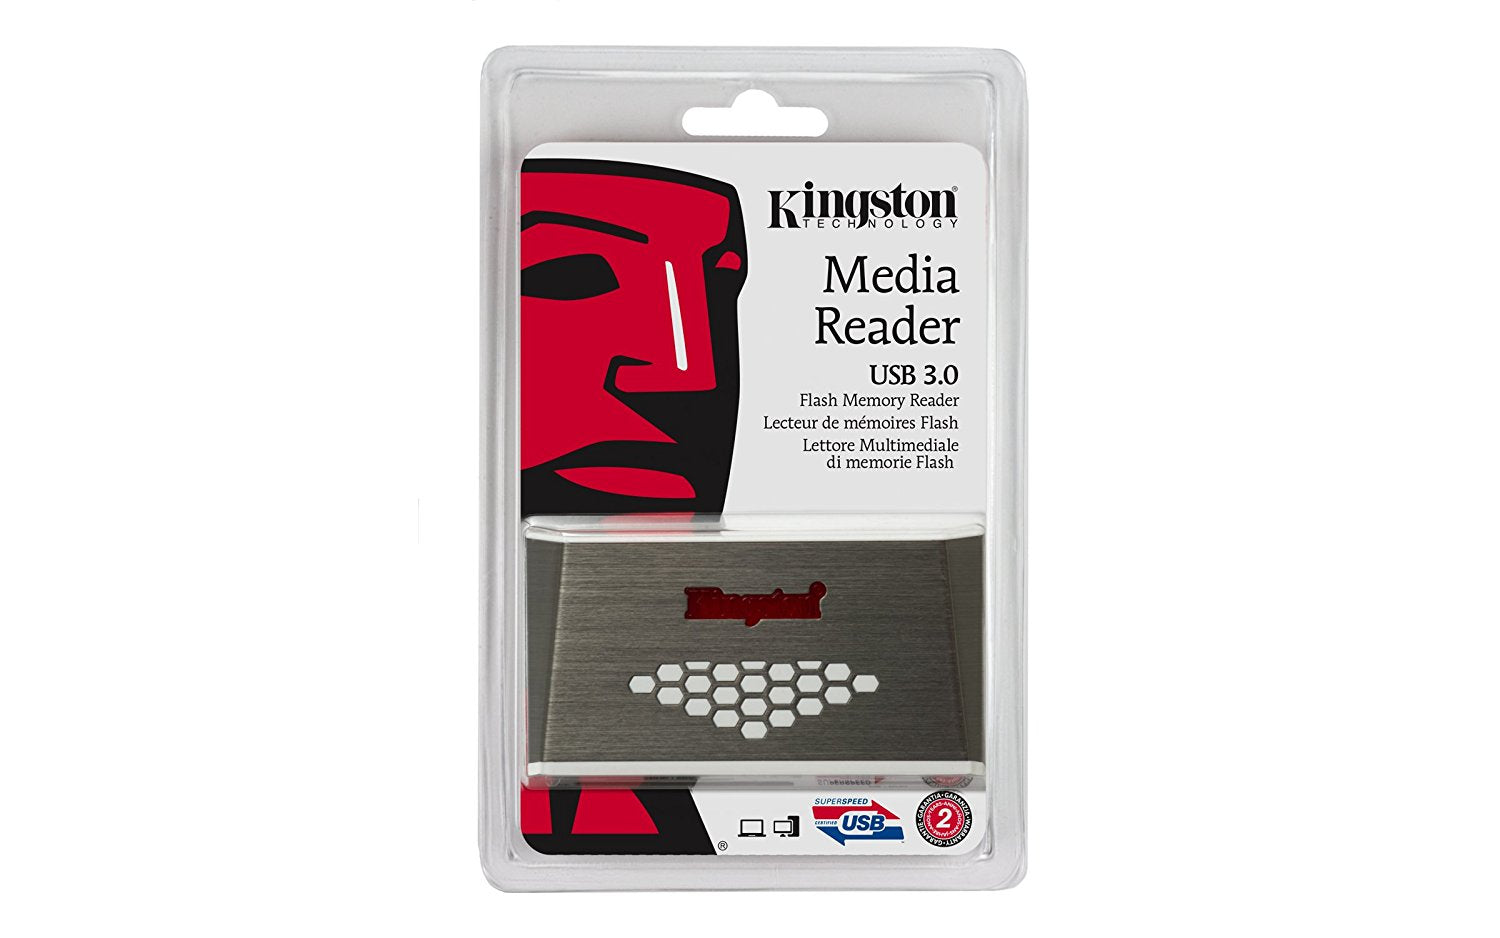 Kingston Digital USB 3.0 Super Speed Multi-Card Reader for SD/SDHC/SDXC/microSD/MS/Compact Flash CF Cards (FCR-HS4)